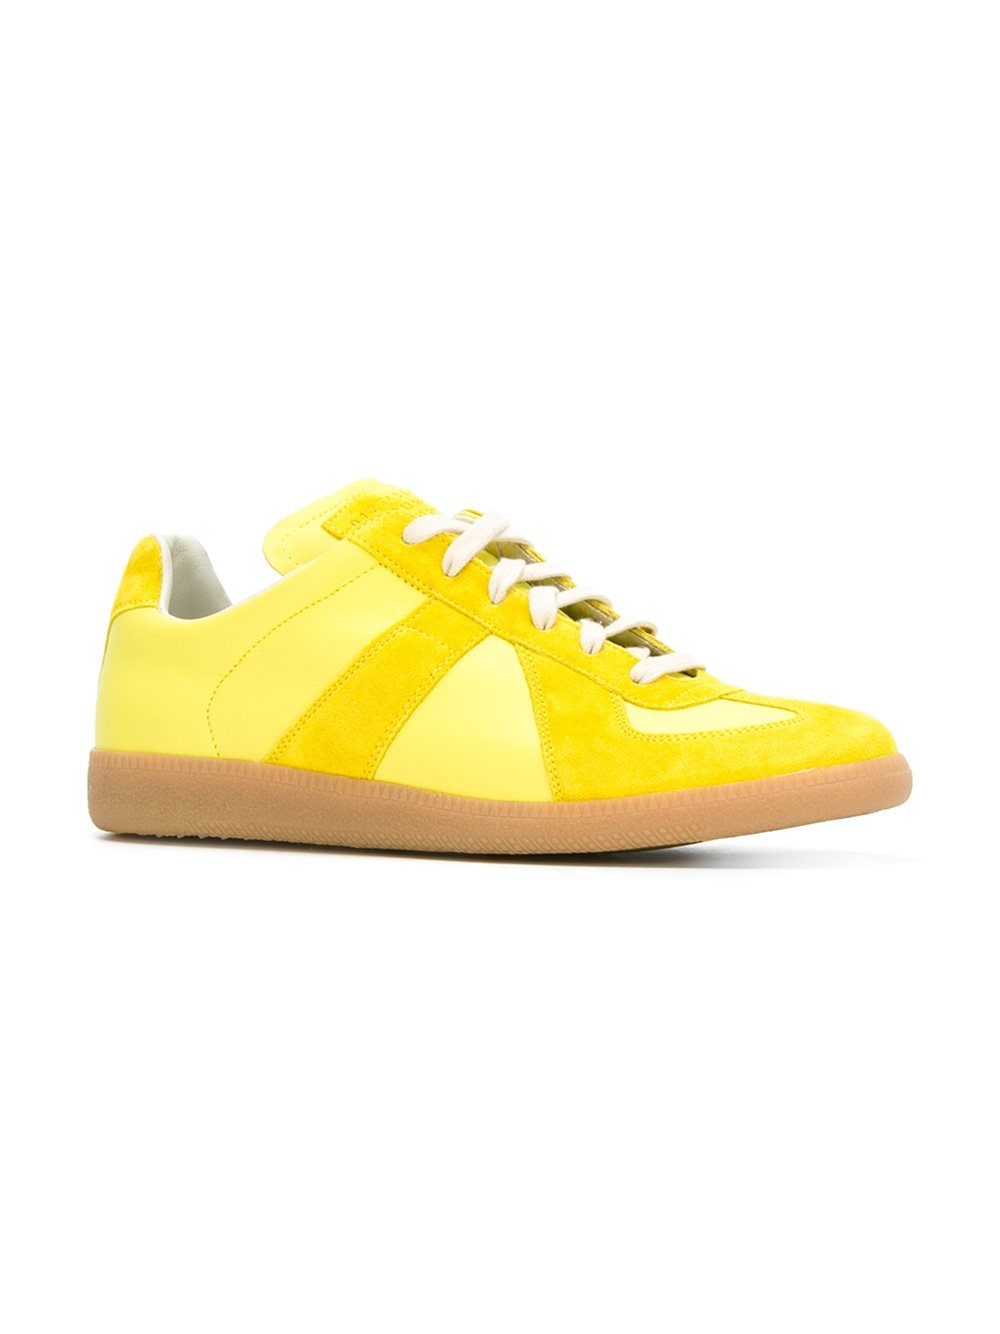 Lyst - Maison Margiela 'replica' Sneakers in Yellow for Men